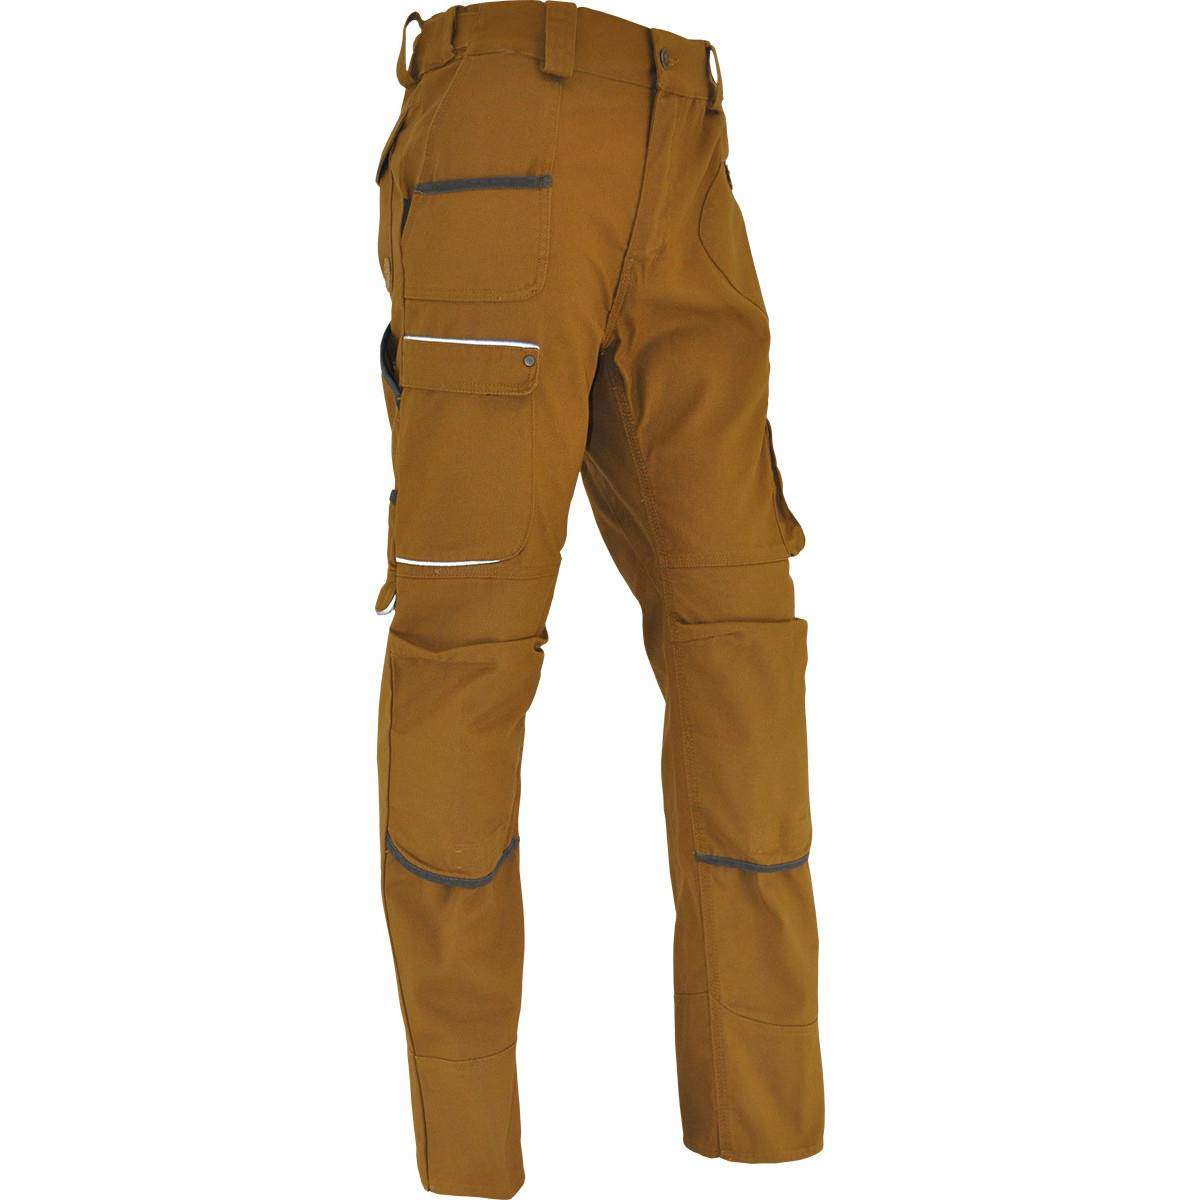 SAHARA work trousers size 46, bronze